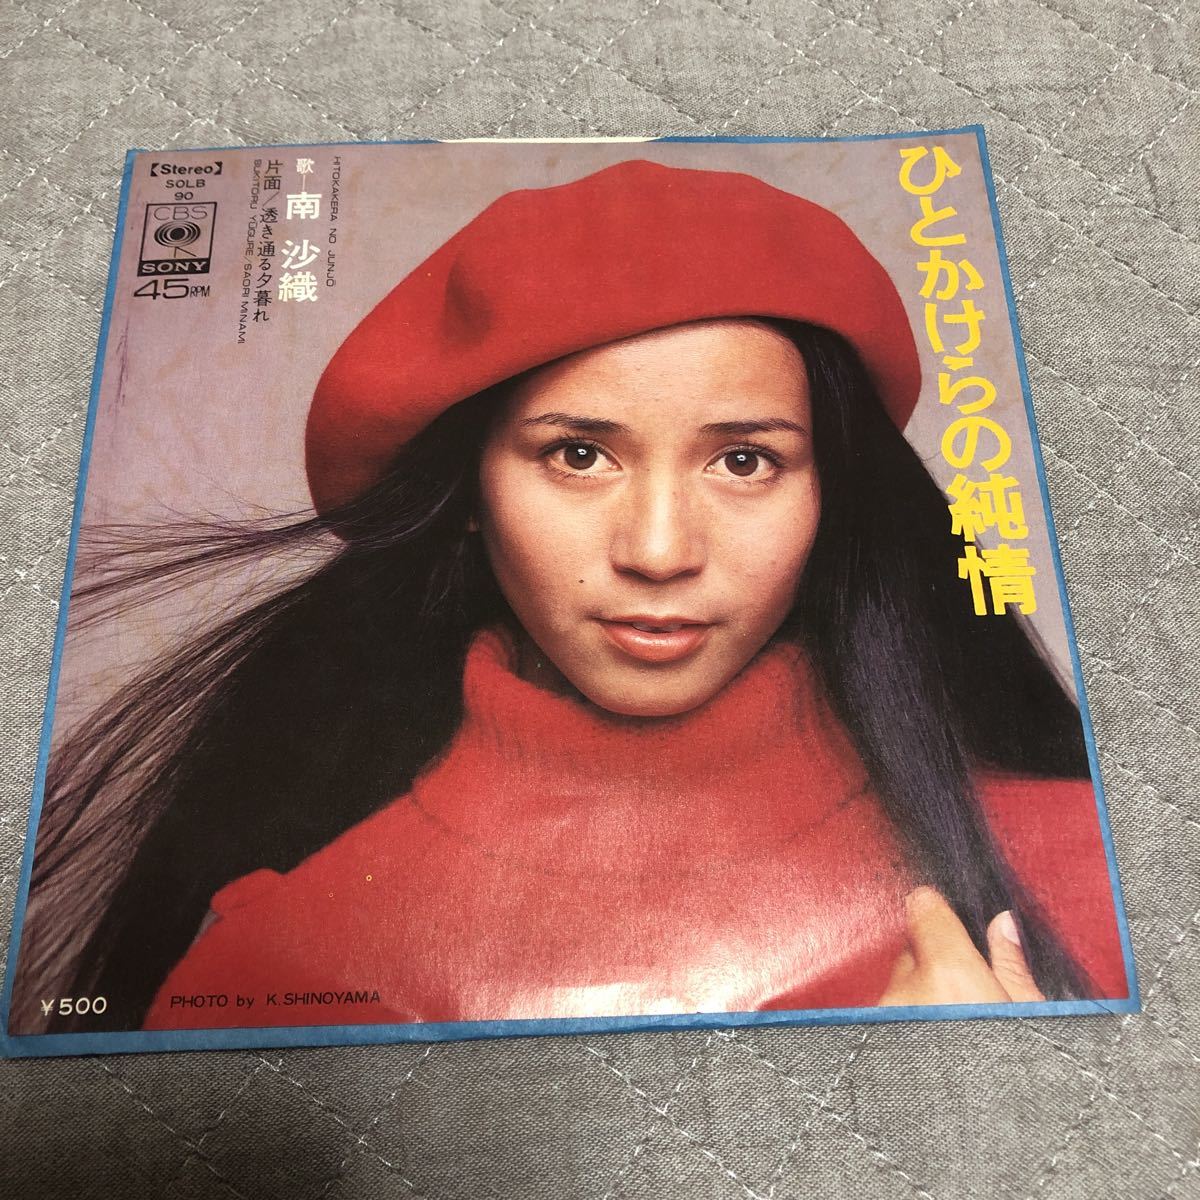 Saori Minami Personal EP Record